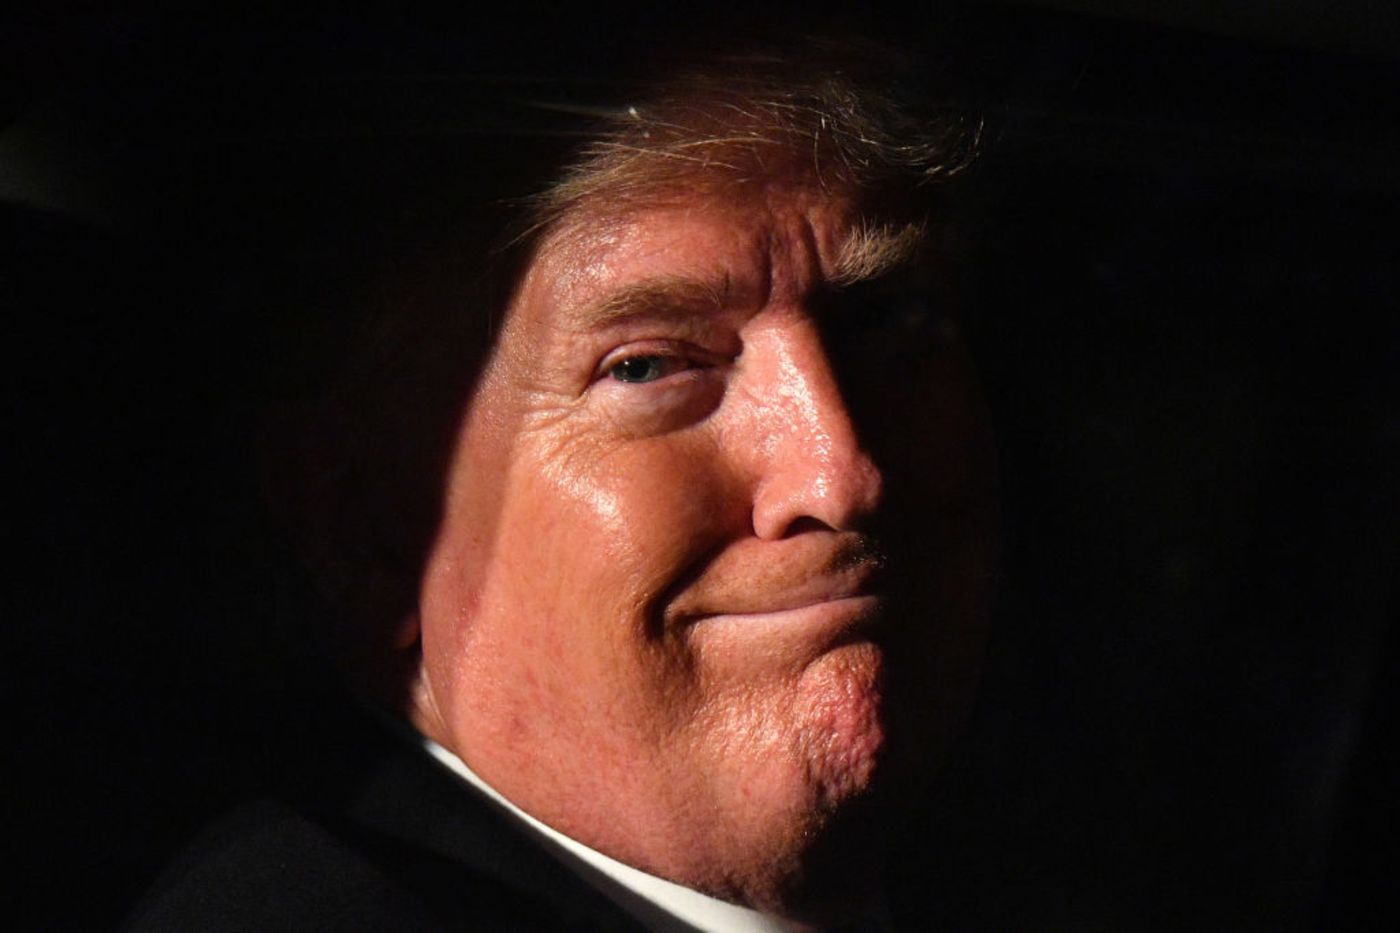 Trump smiling profile